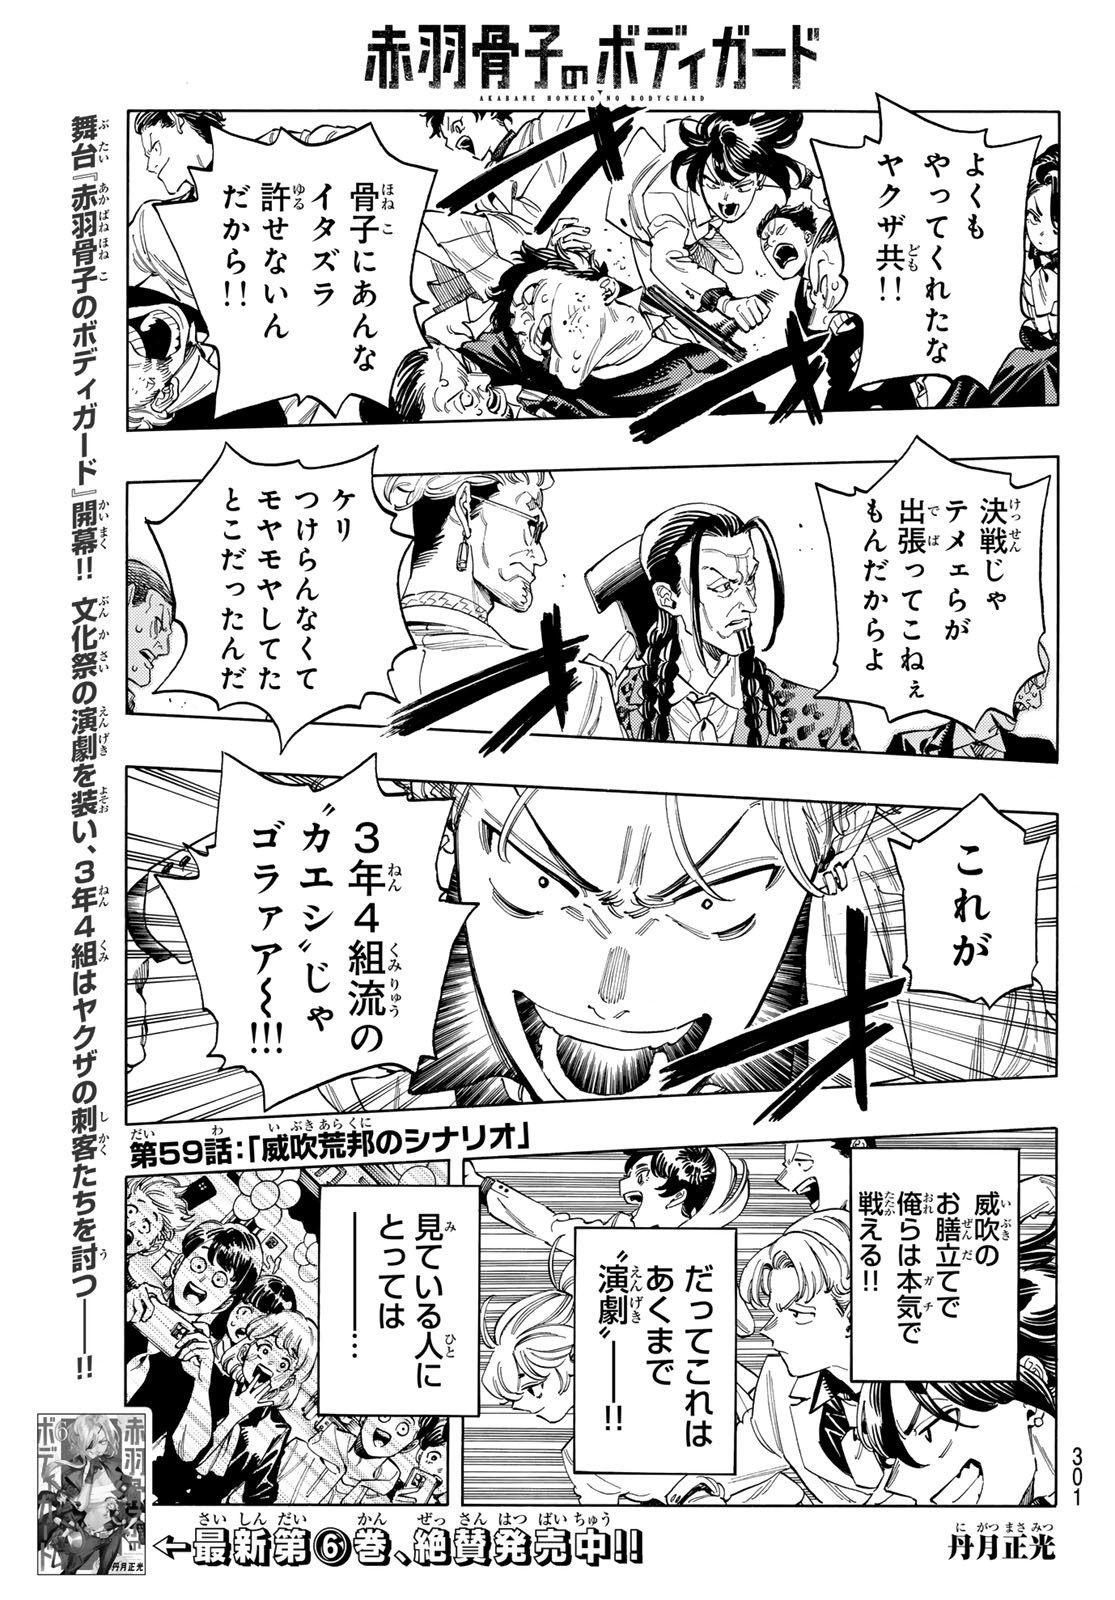 Akabane Honeko no Bodyguard - Chapter 59 - Page 1